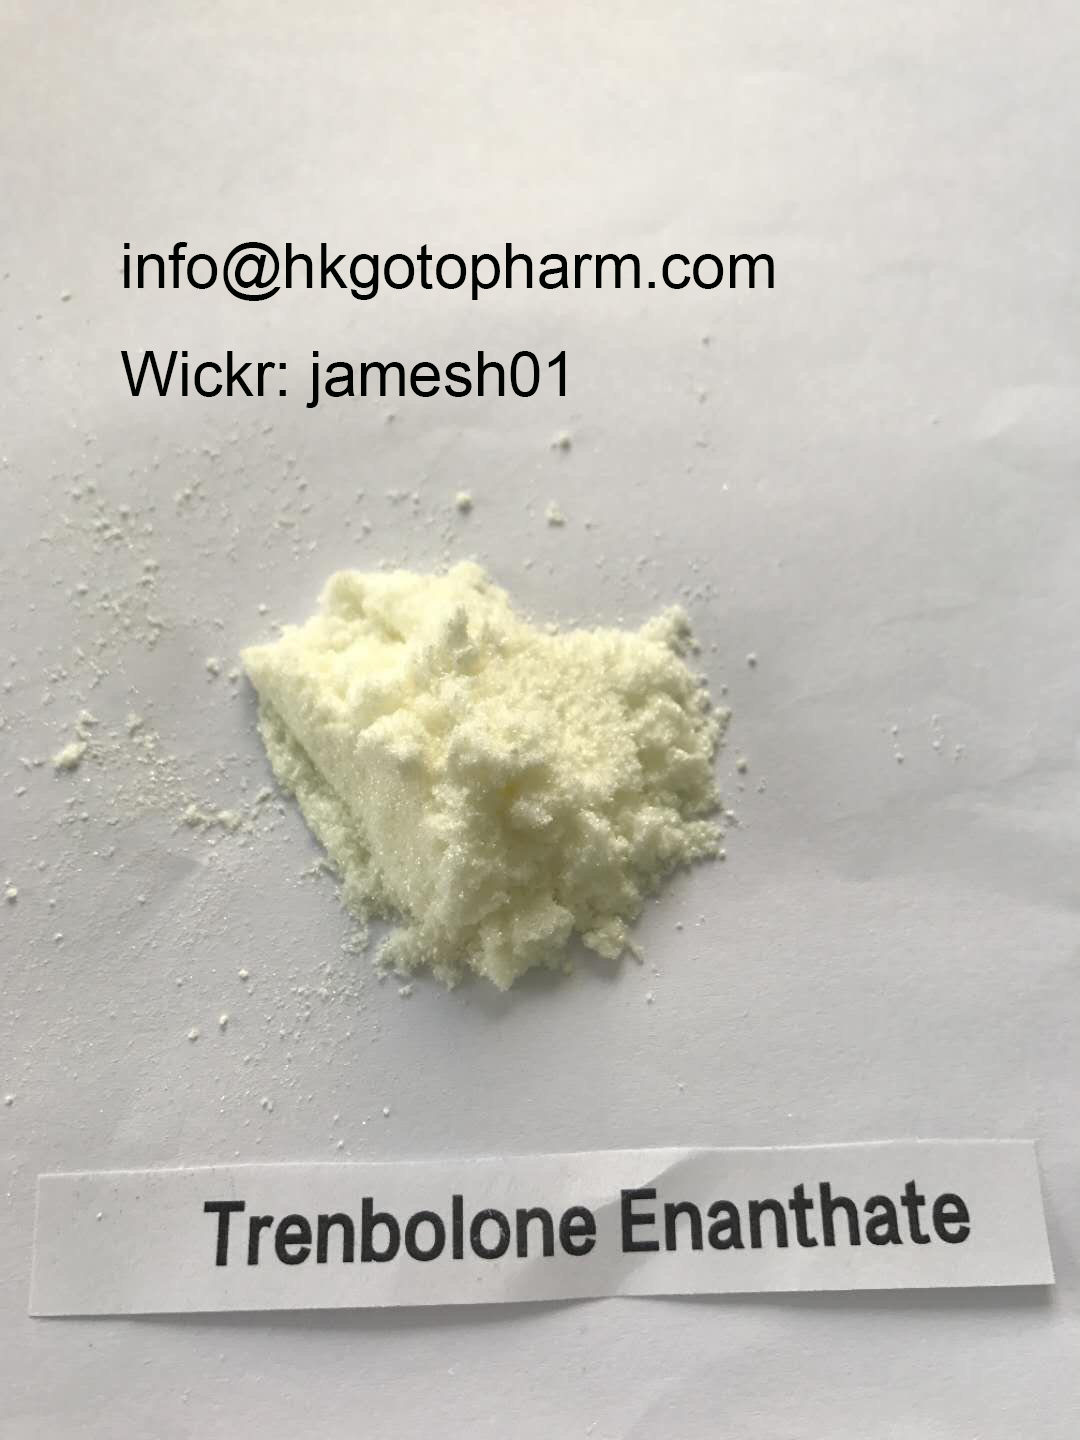 Pure Trenbolone Enanthate powder